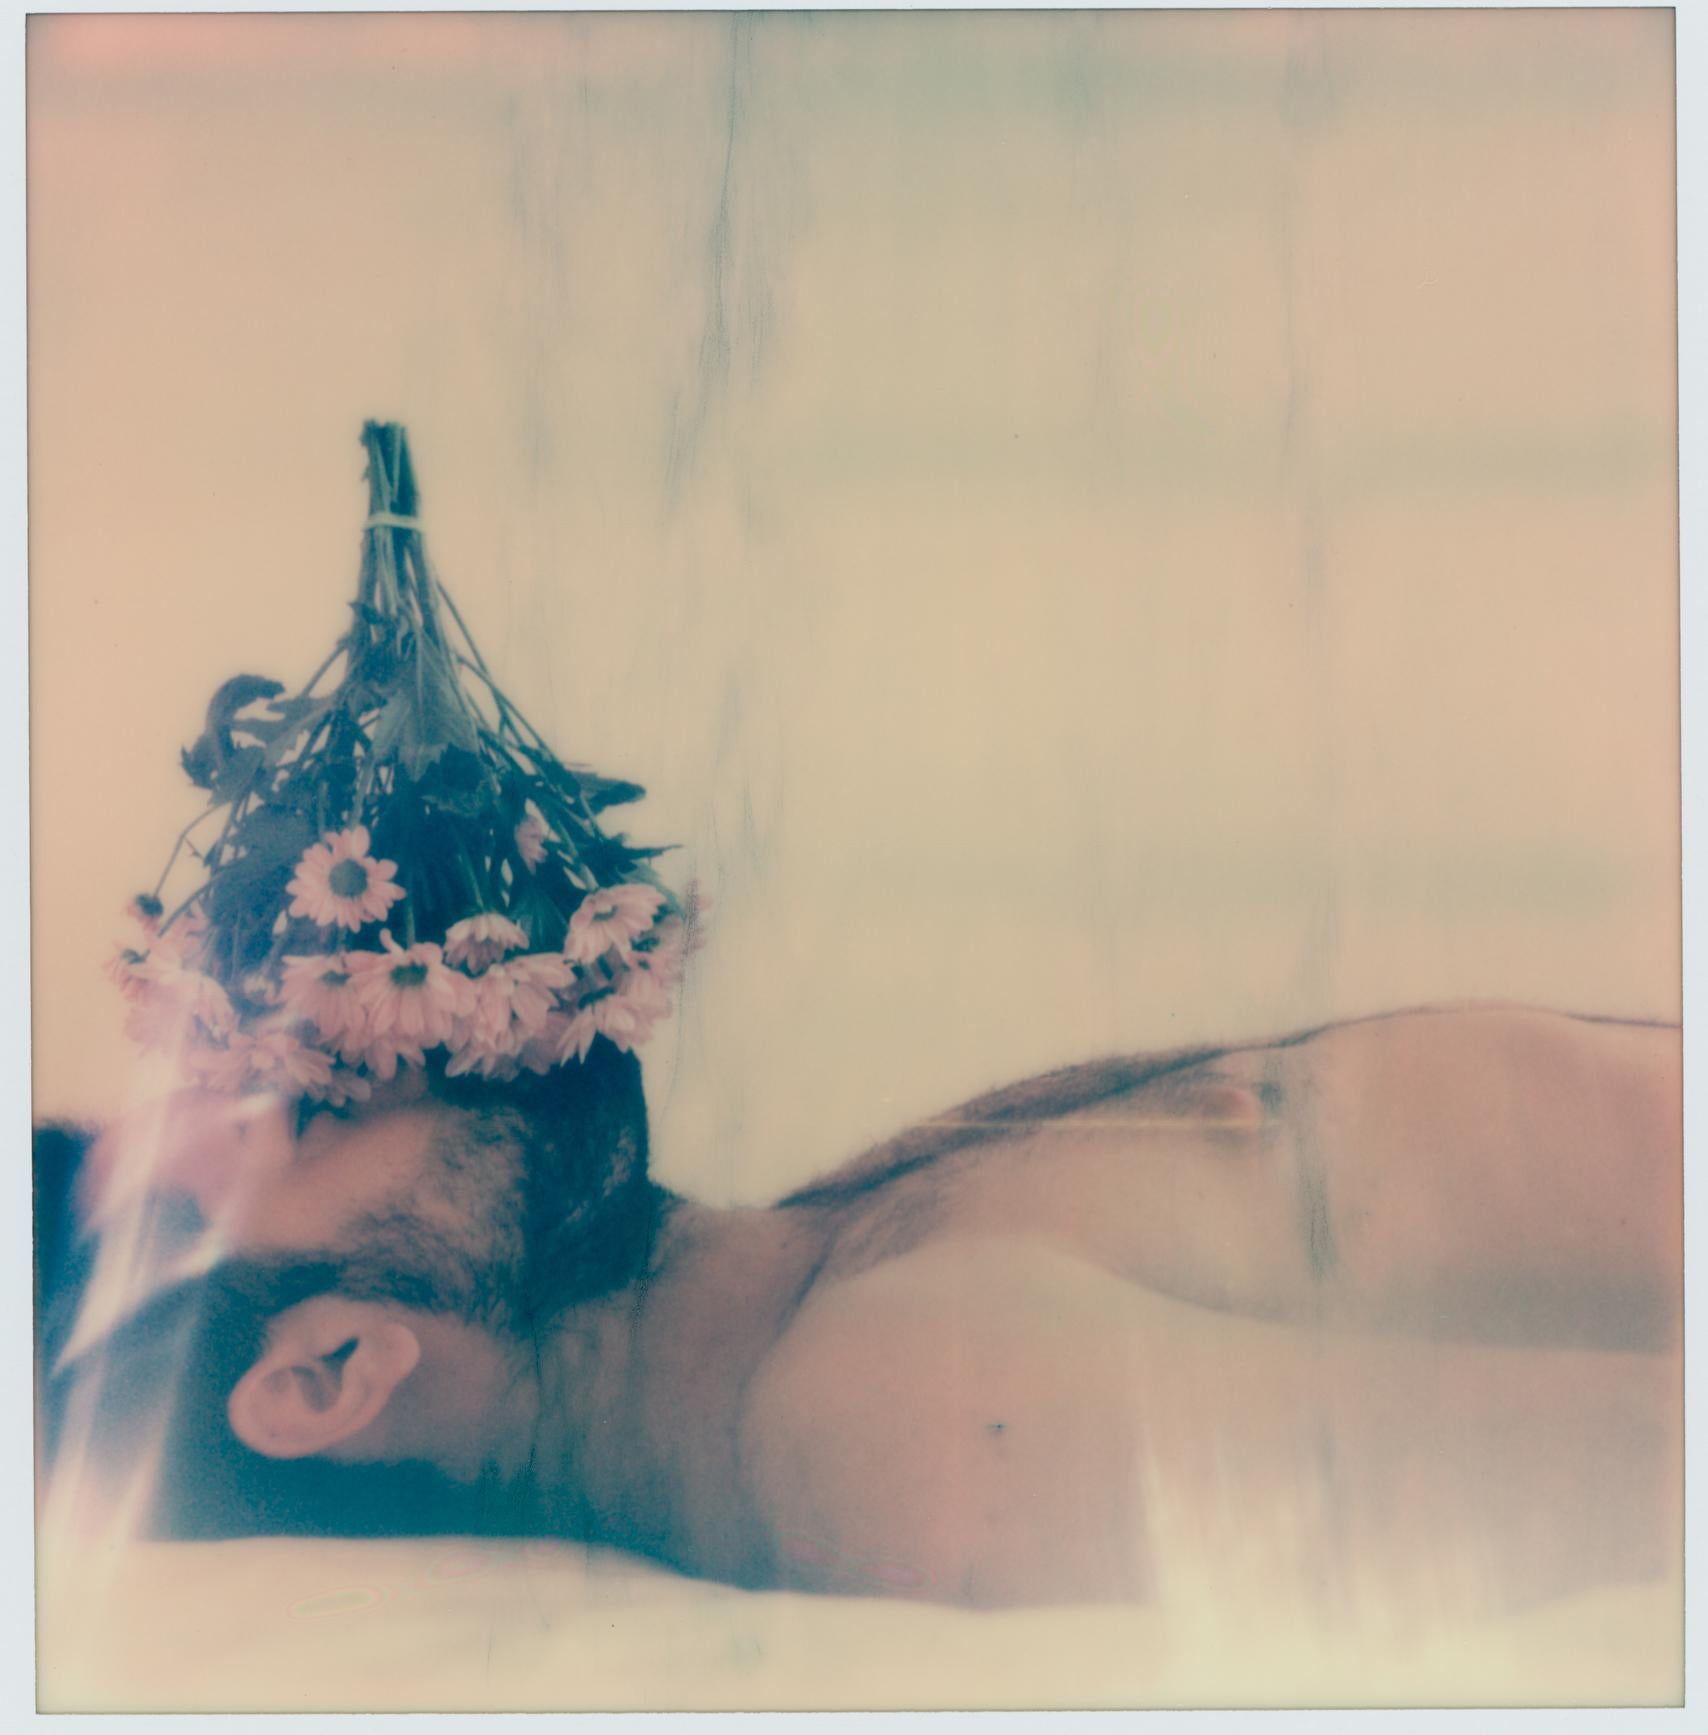 Ariel Shelleg Portrait Photograph - THE GROUND - SELF PORTRAIT - 21st Century, Contemporary, Polaroid, Men, Love